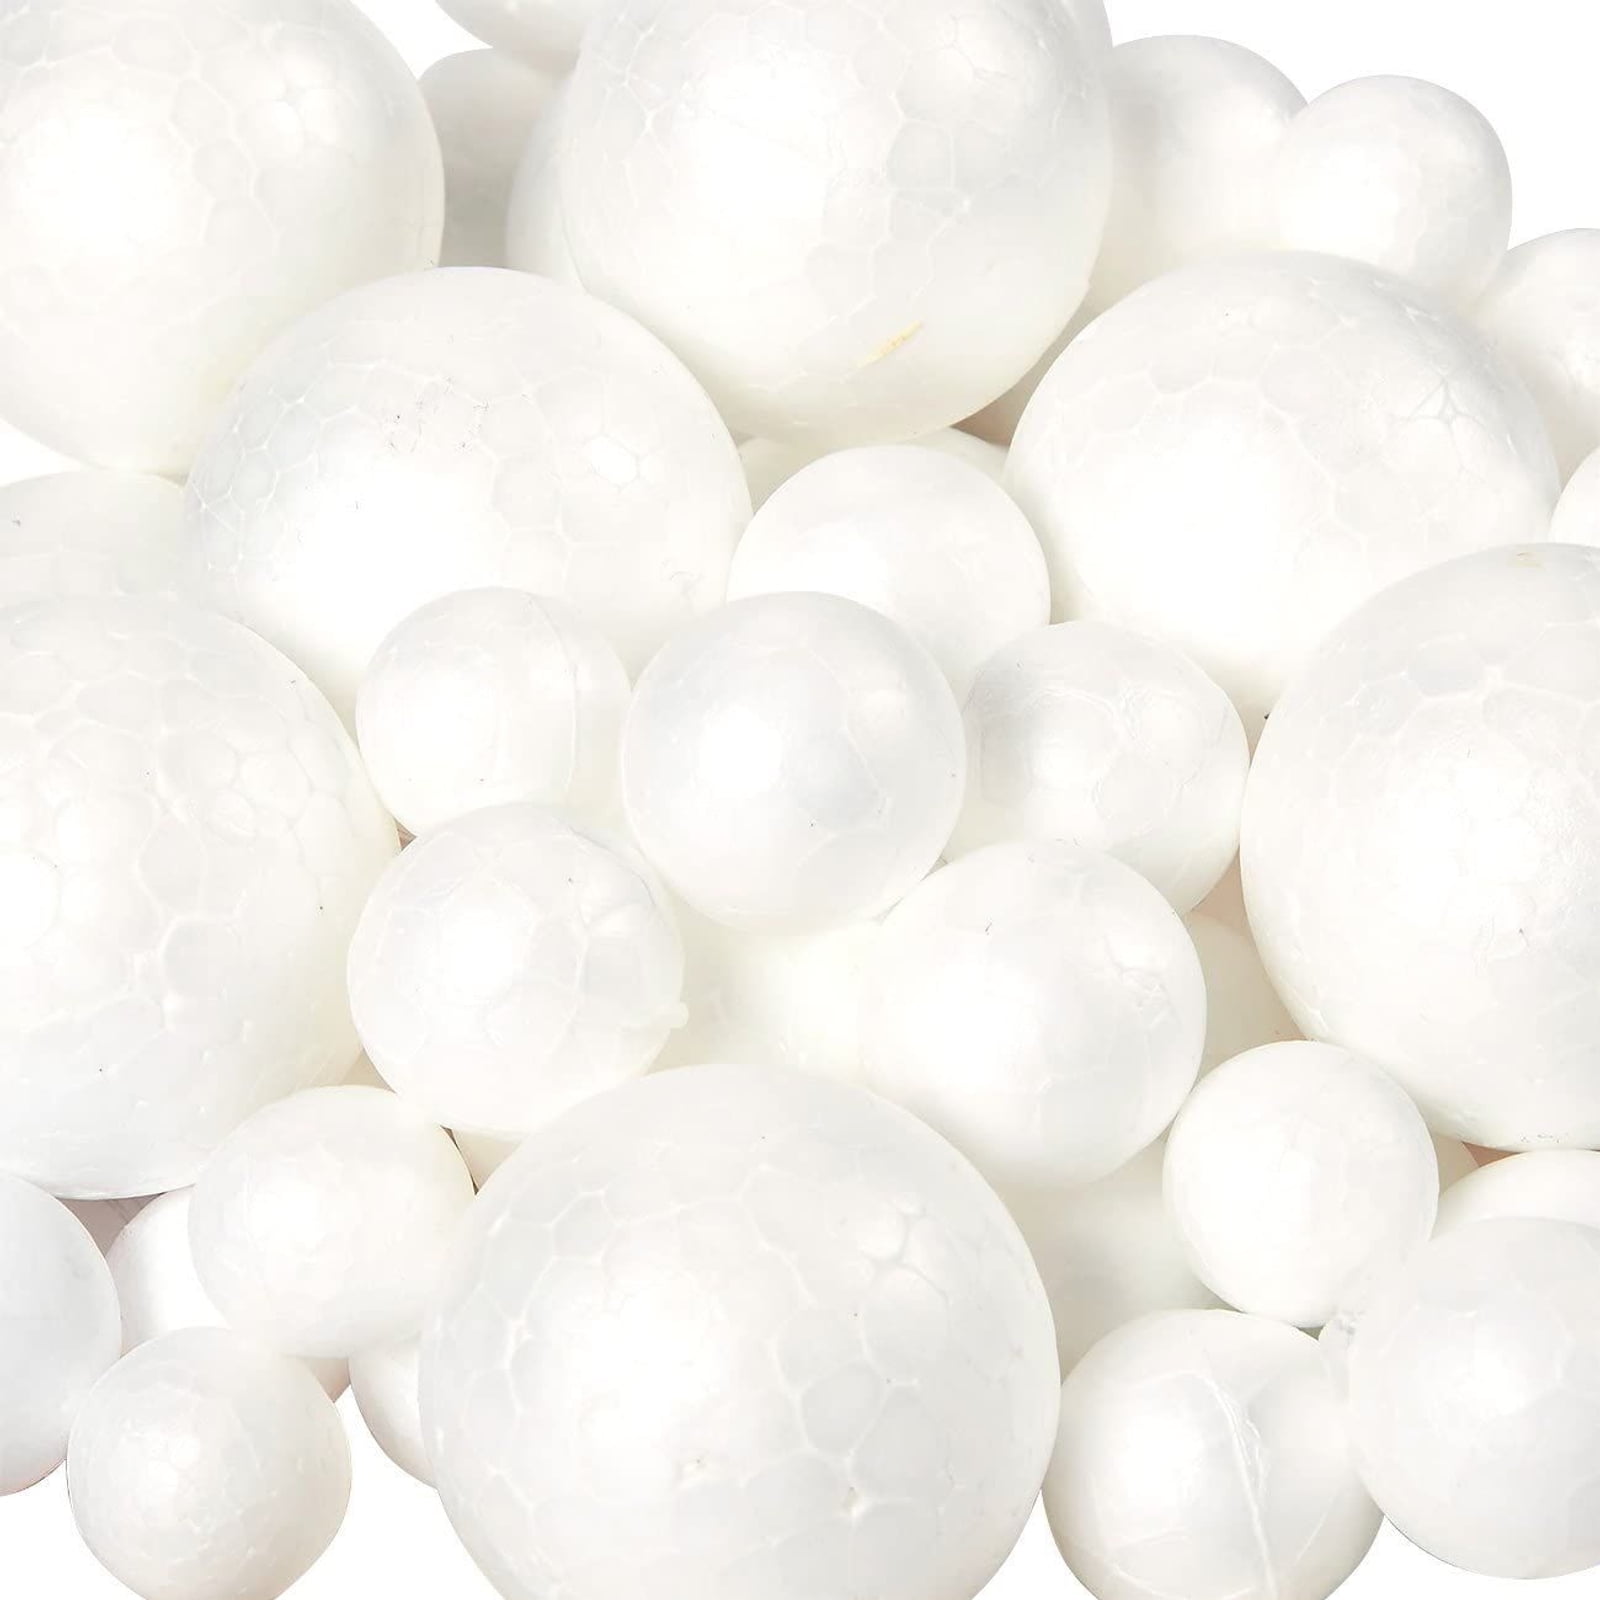 Polystyrene Modelling Balls Spheres Baubles 100 Balls x 10cm 4" 100mm 